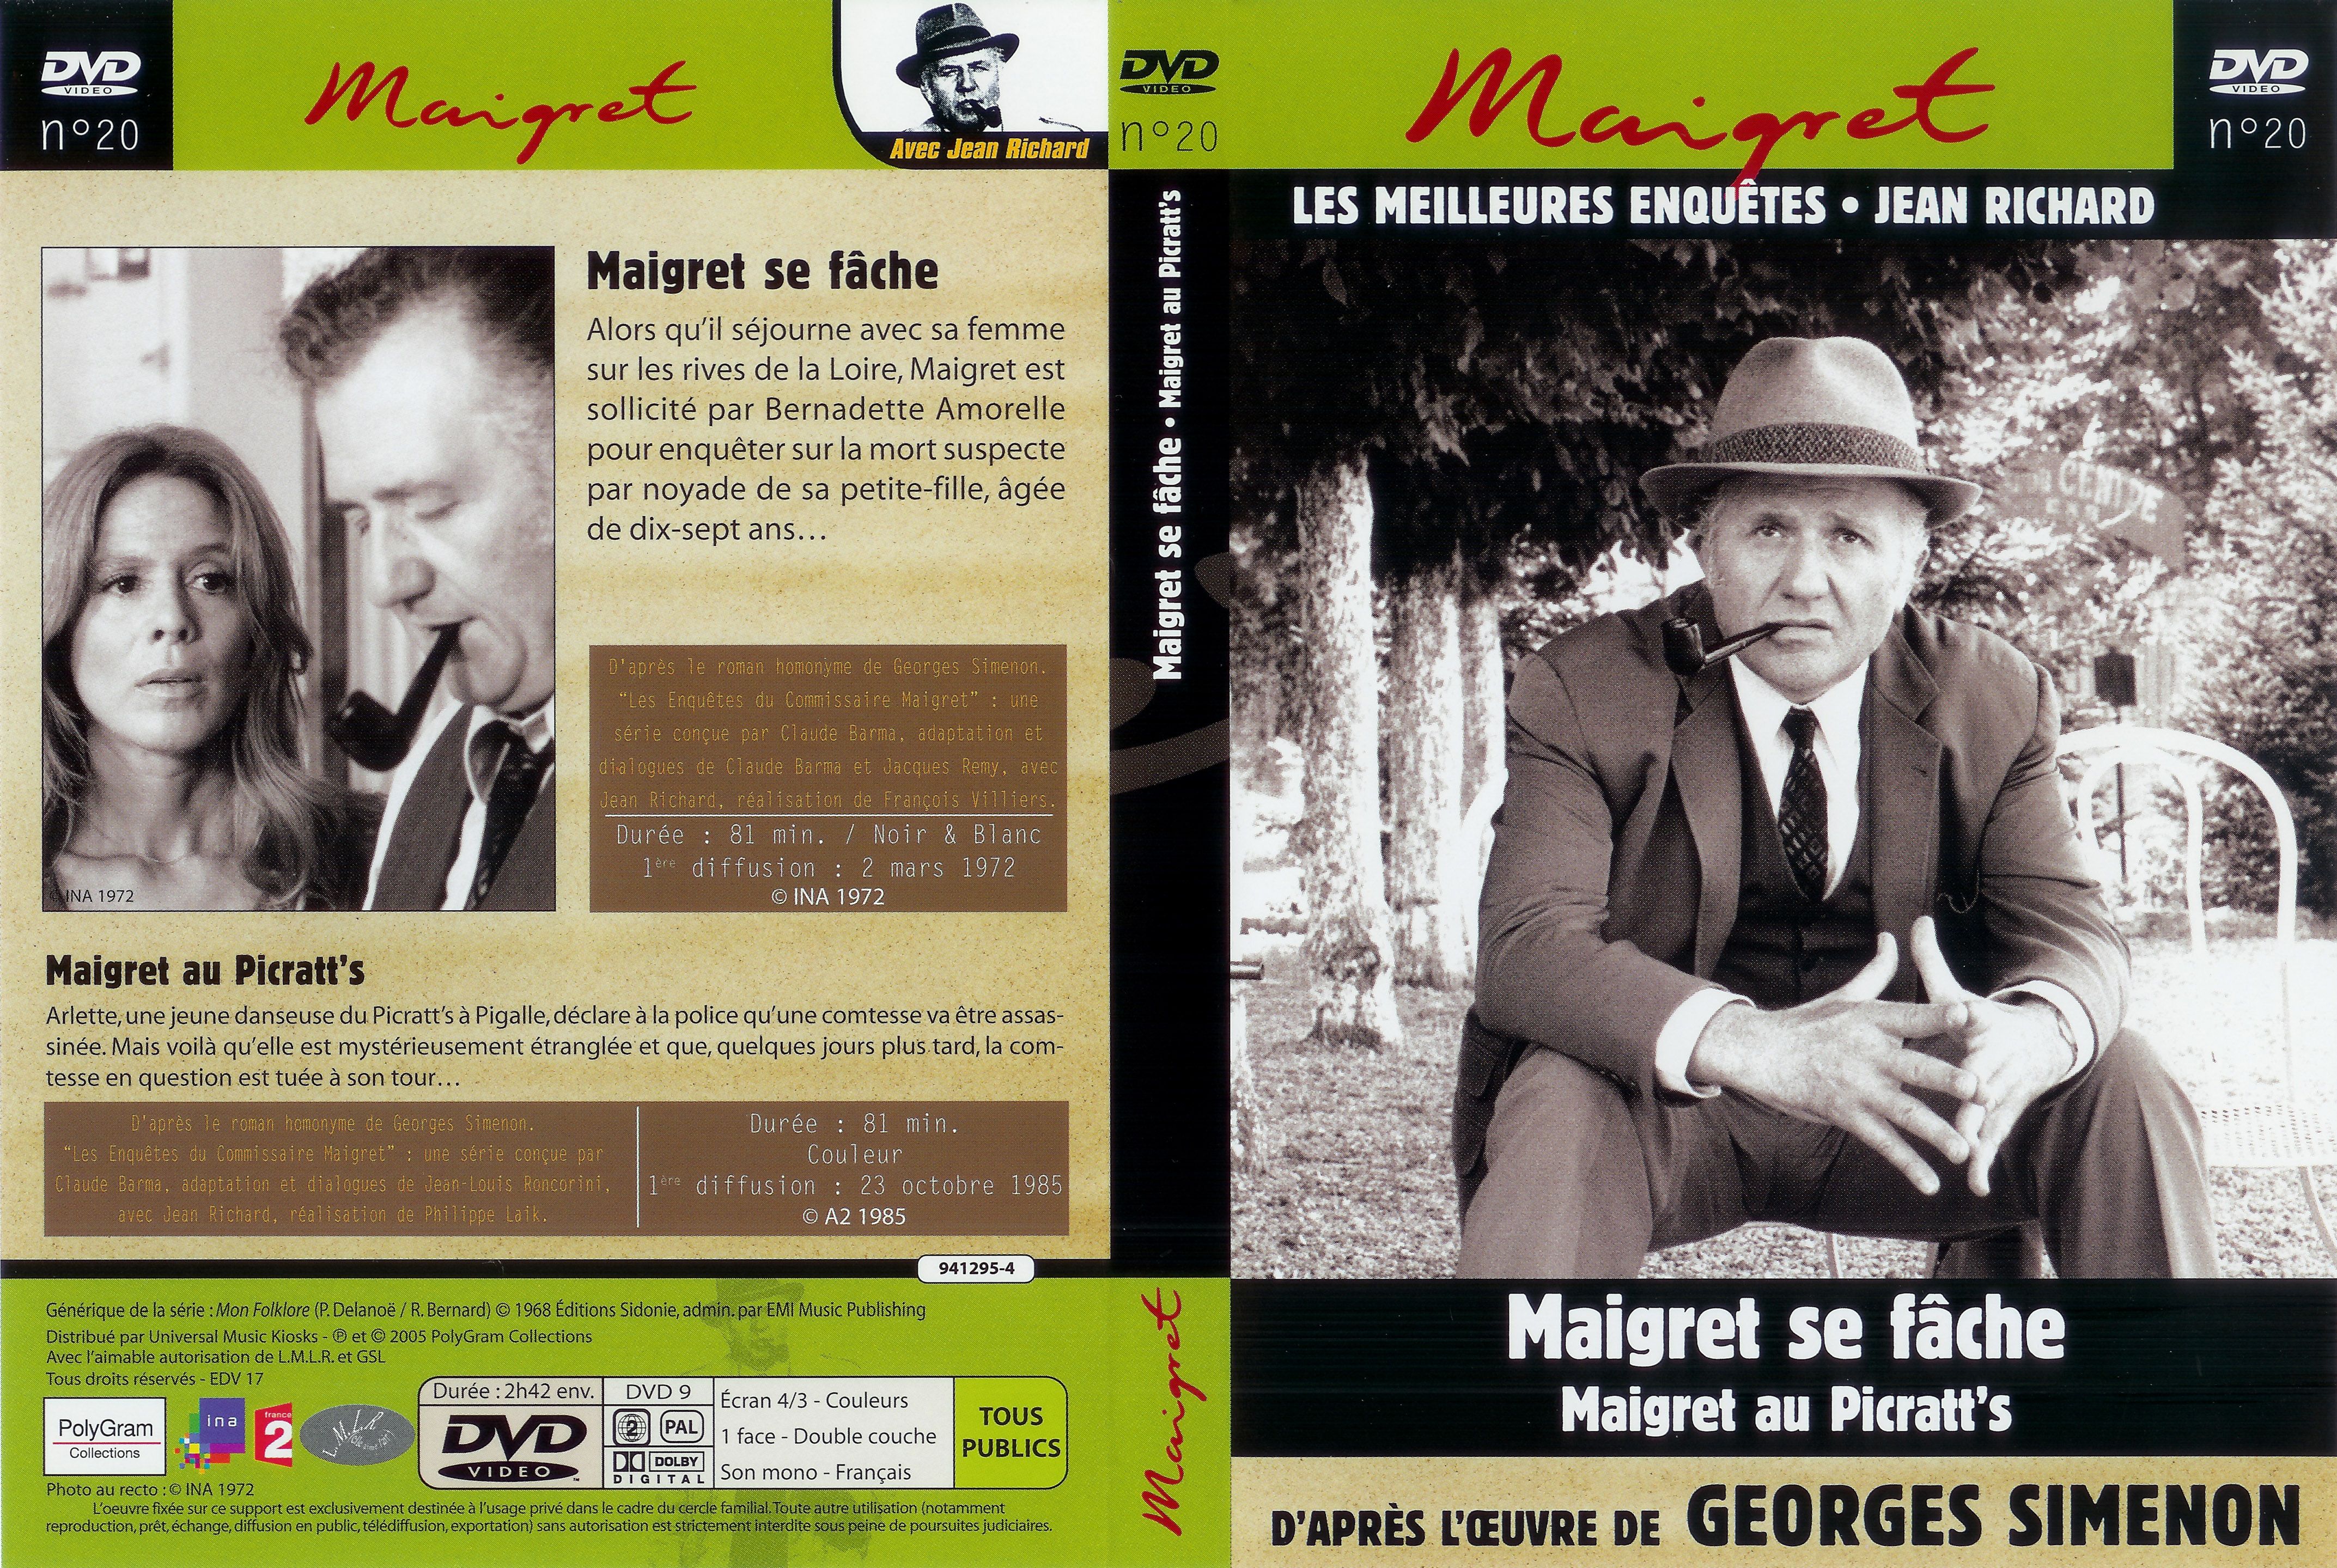 Jaquette DVD Maigret (Jean Richard) vol 20